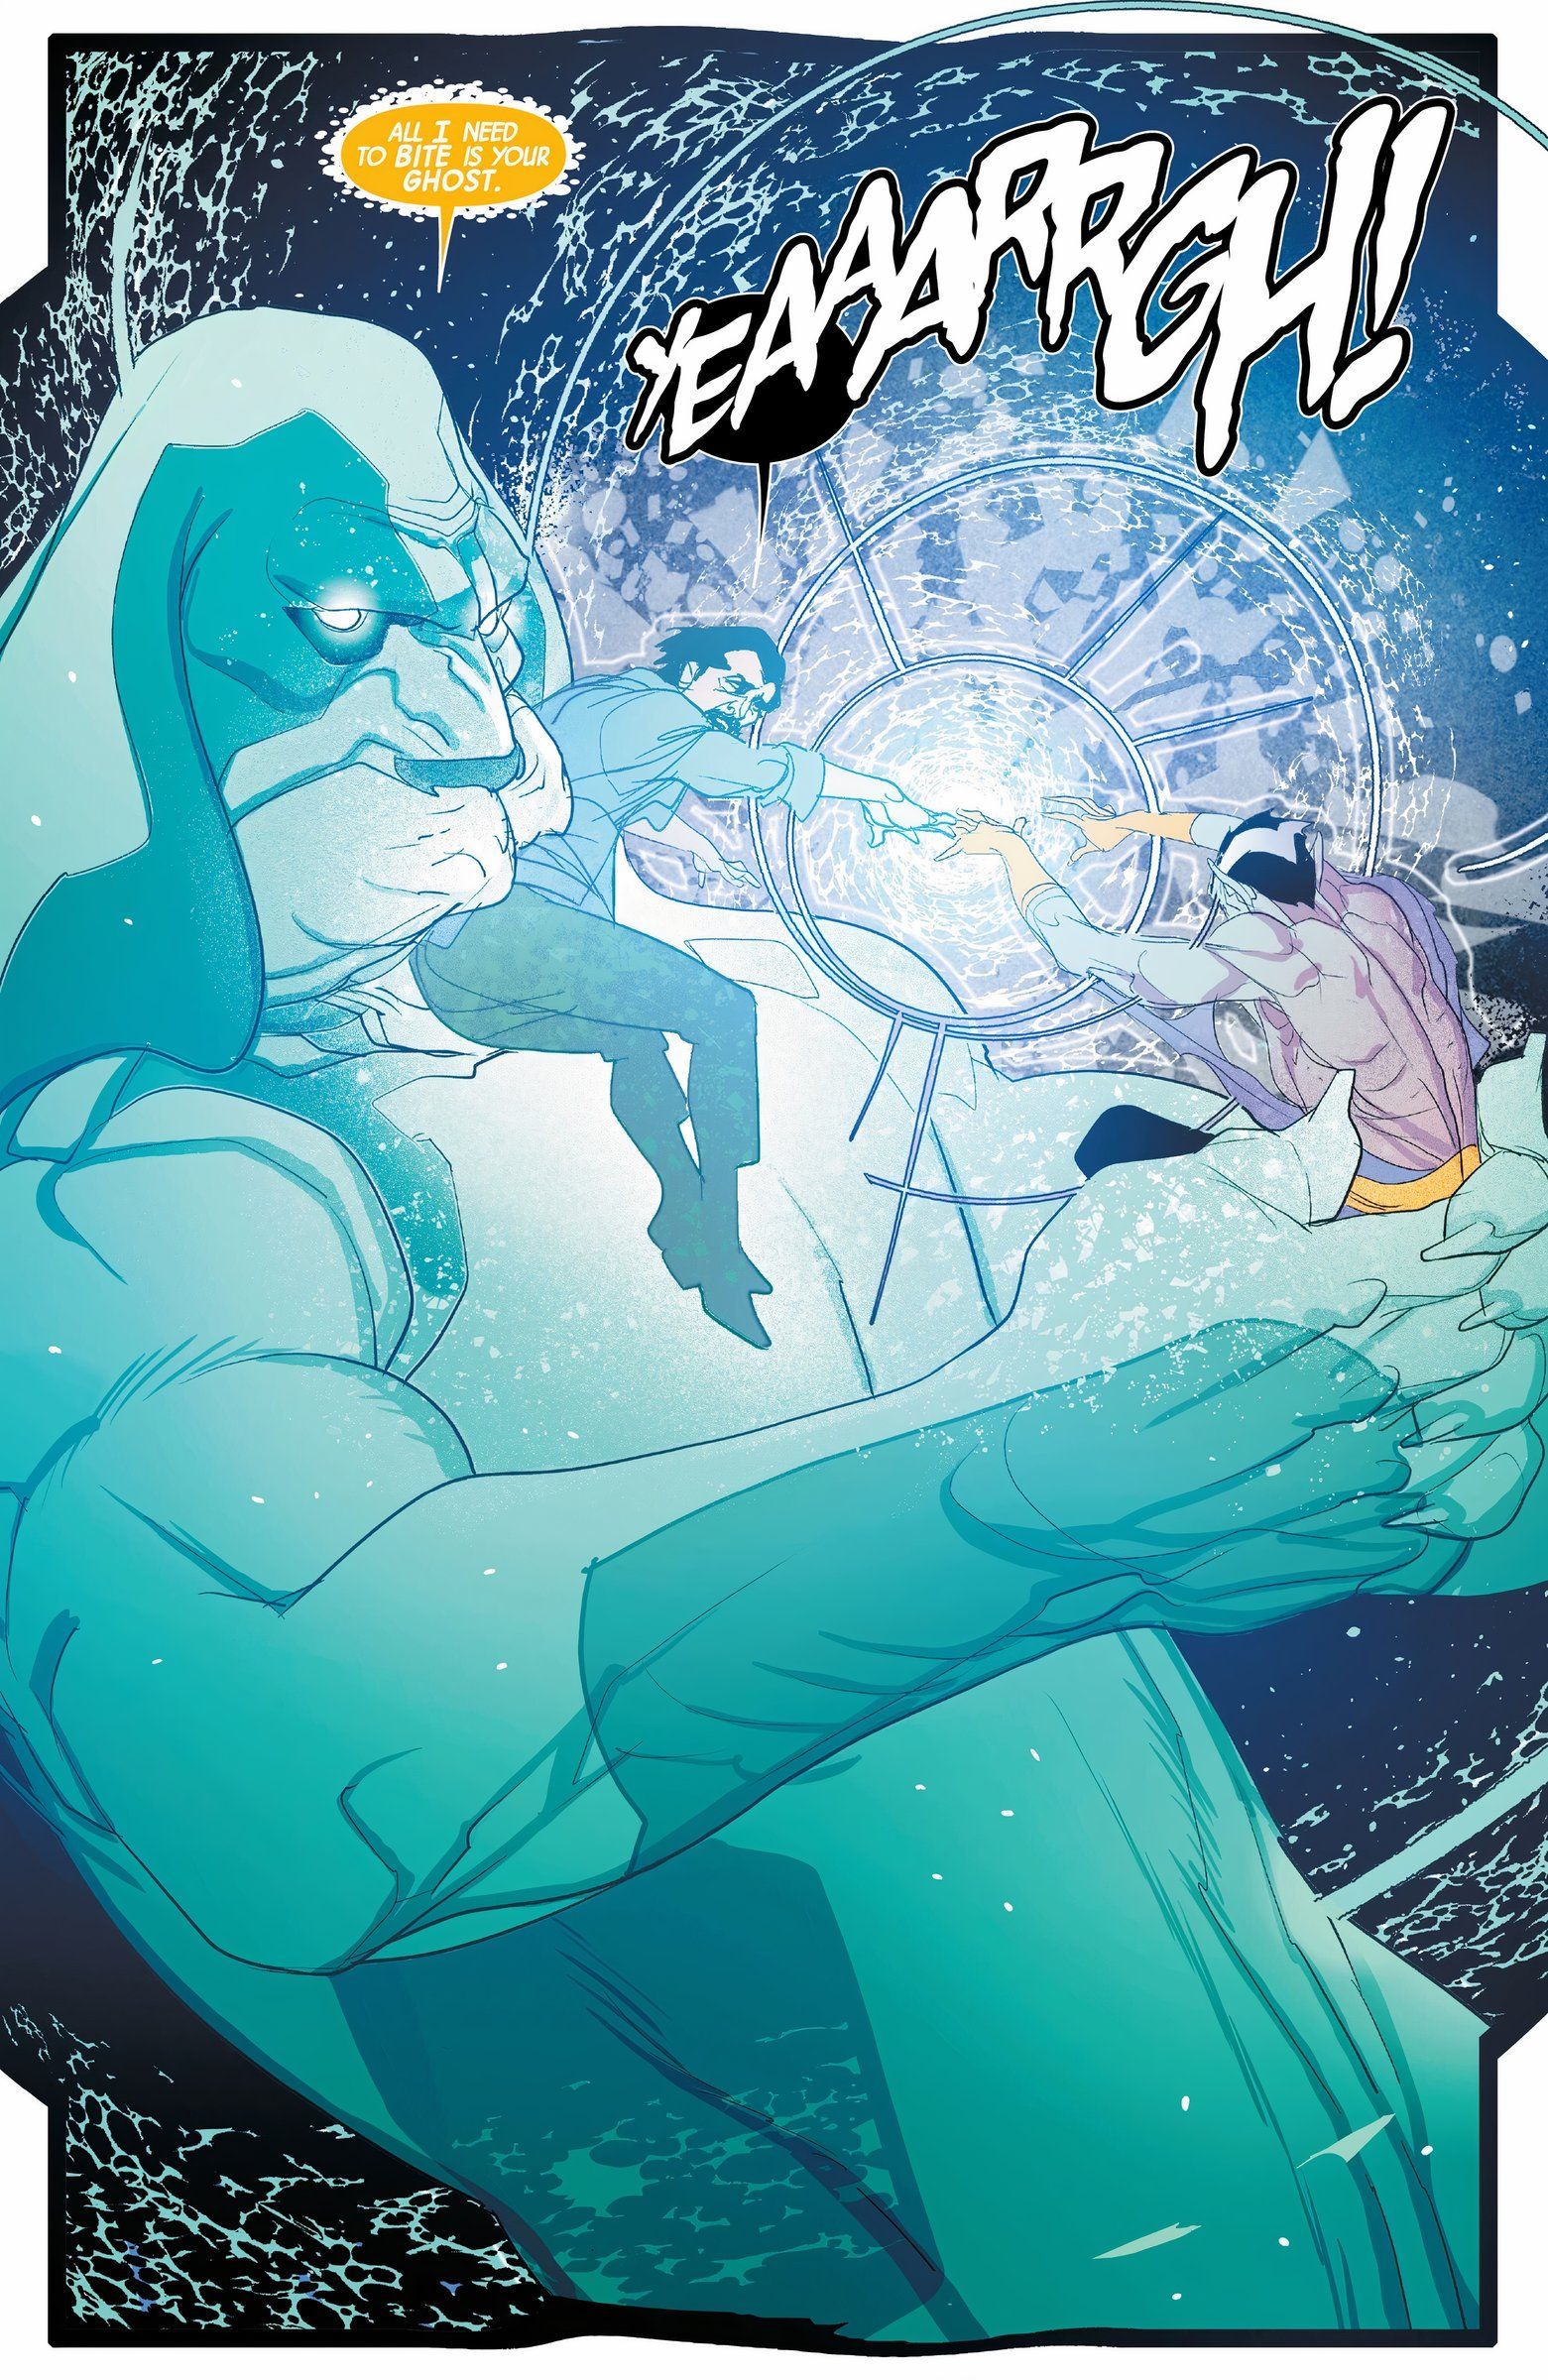 Bats pulls Victor Strange's ghost out of Doctor Strange's body